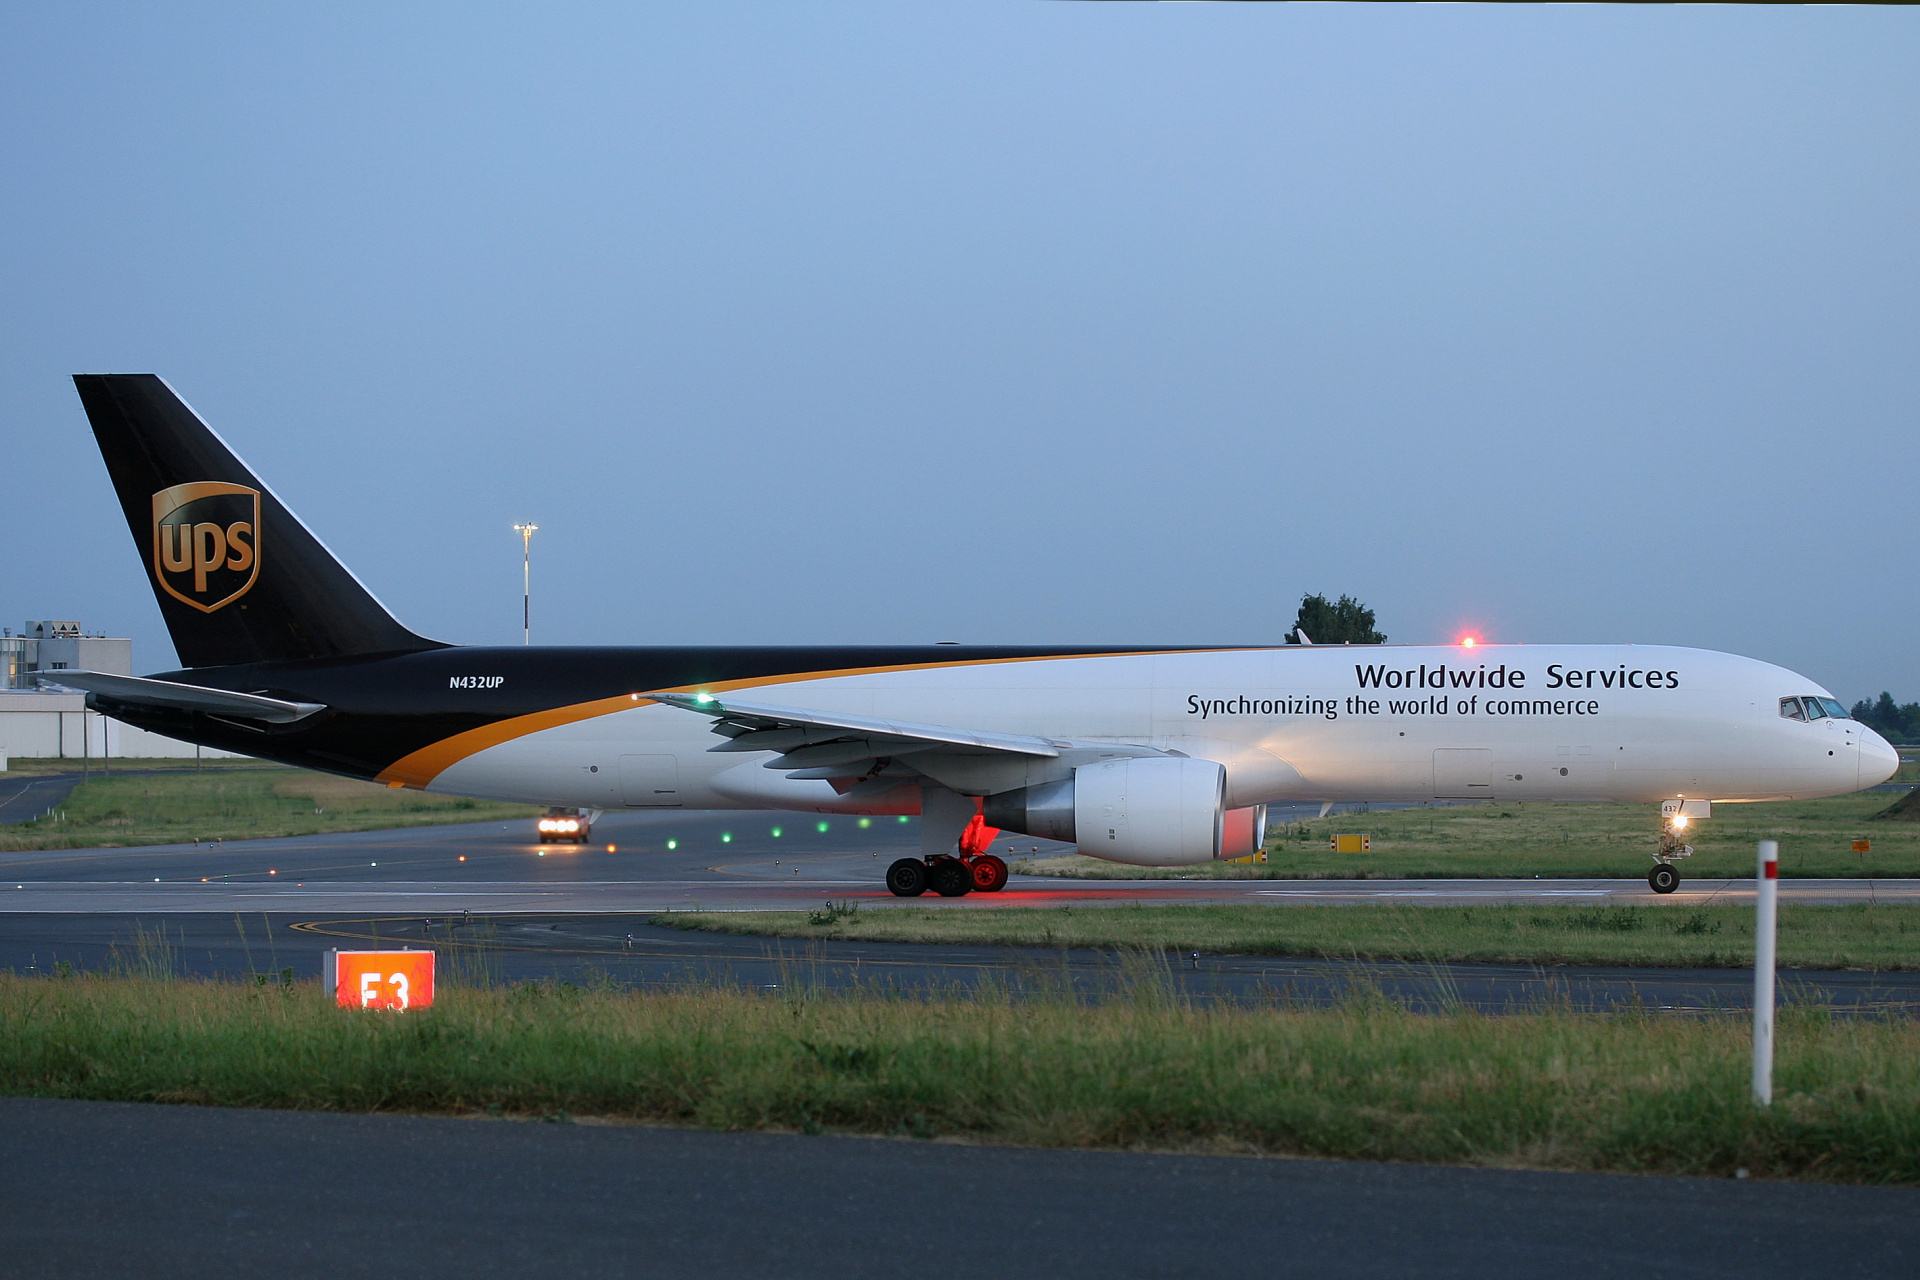 PF, N432UP (Samoloty » Spotting na EPWA » Boeing 757-200F » United Parcel Service (UPS) Airlines)